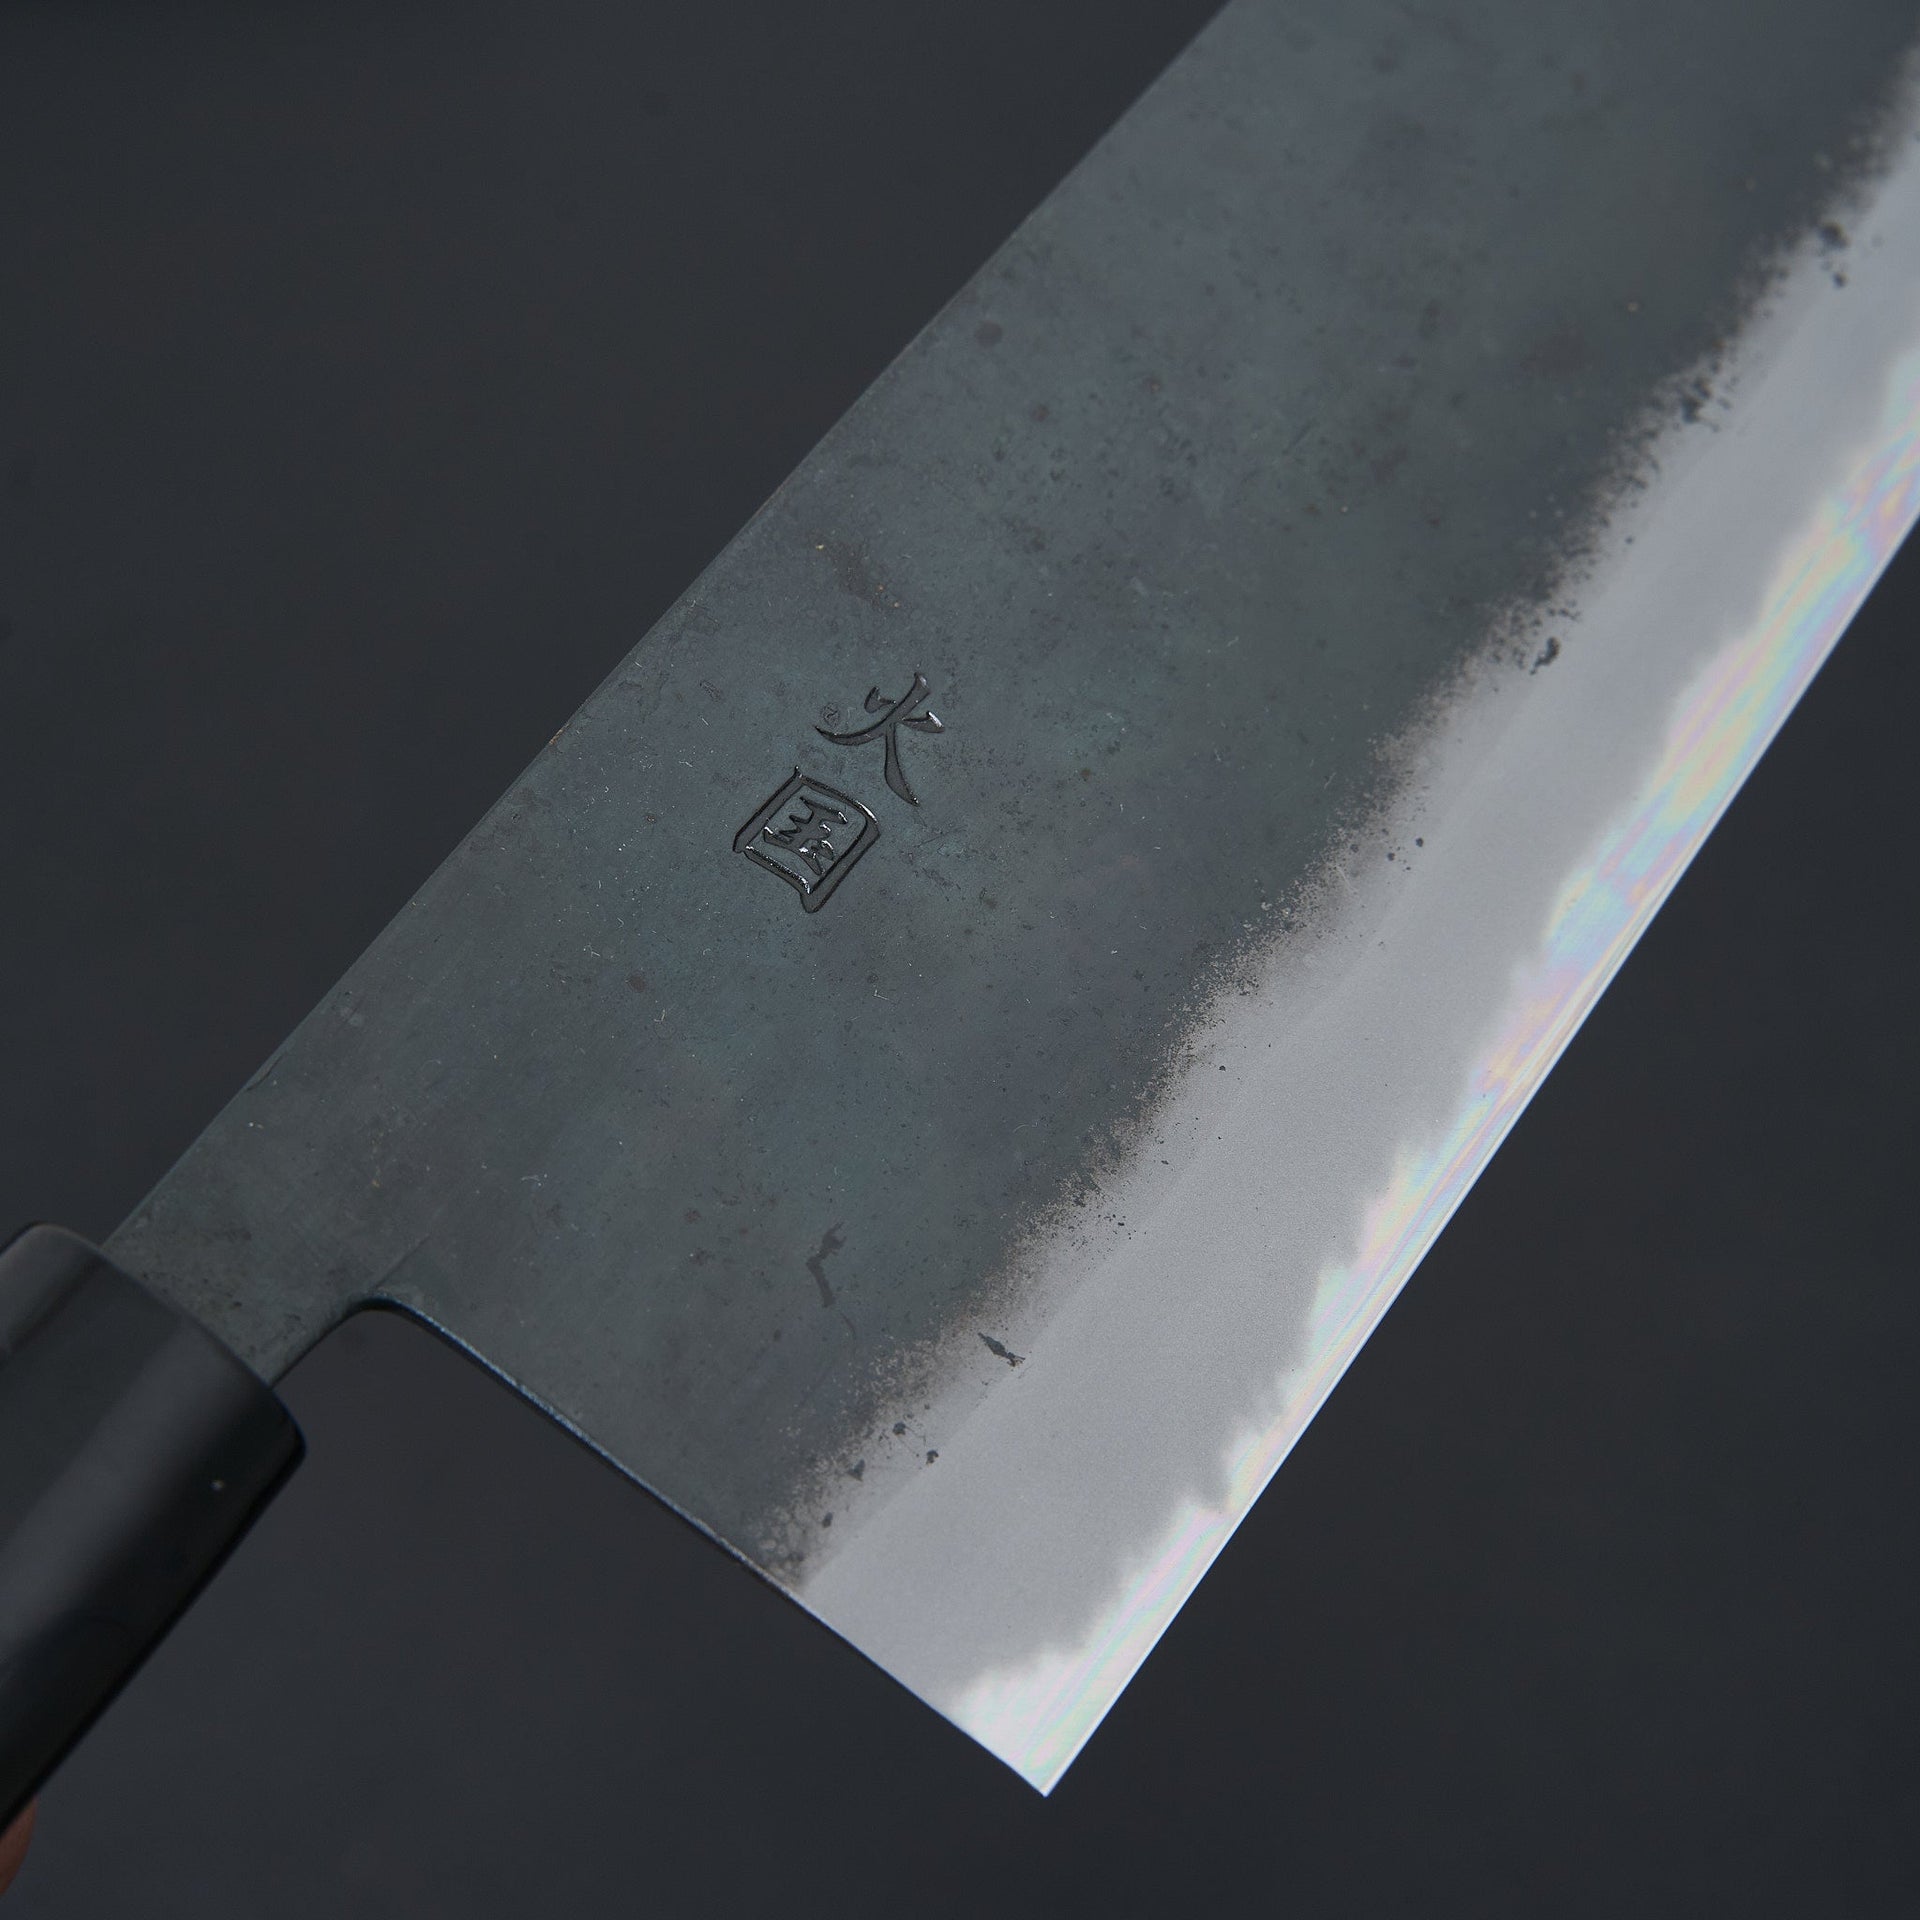 Hinokuni White #1 Chuka 180mm-Hinokuni-Carbon Knife Co